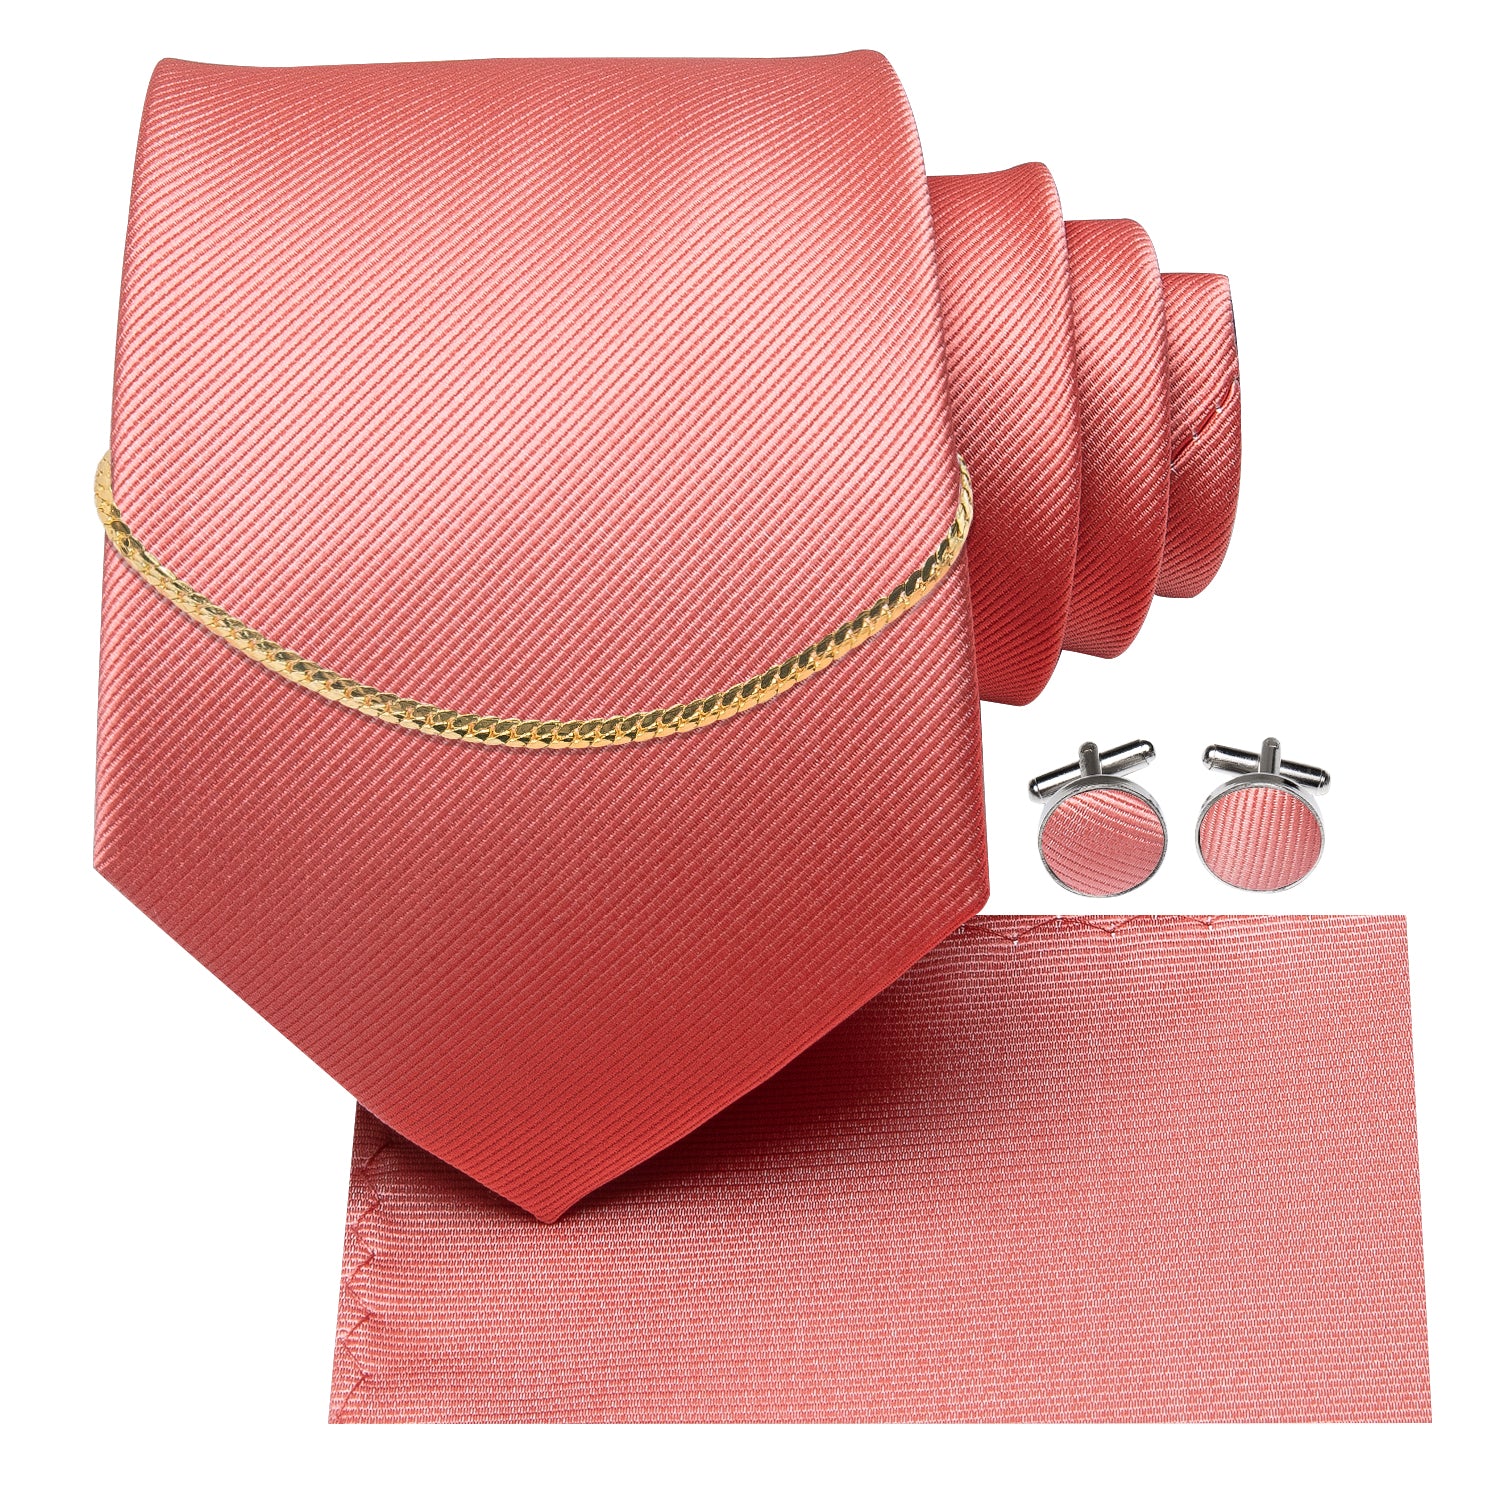 Coral solid Tie Handkerchief Cufflinks Set With Golden Chain